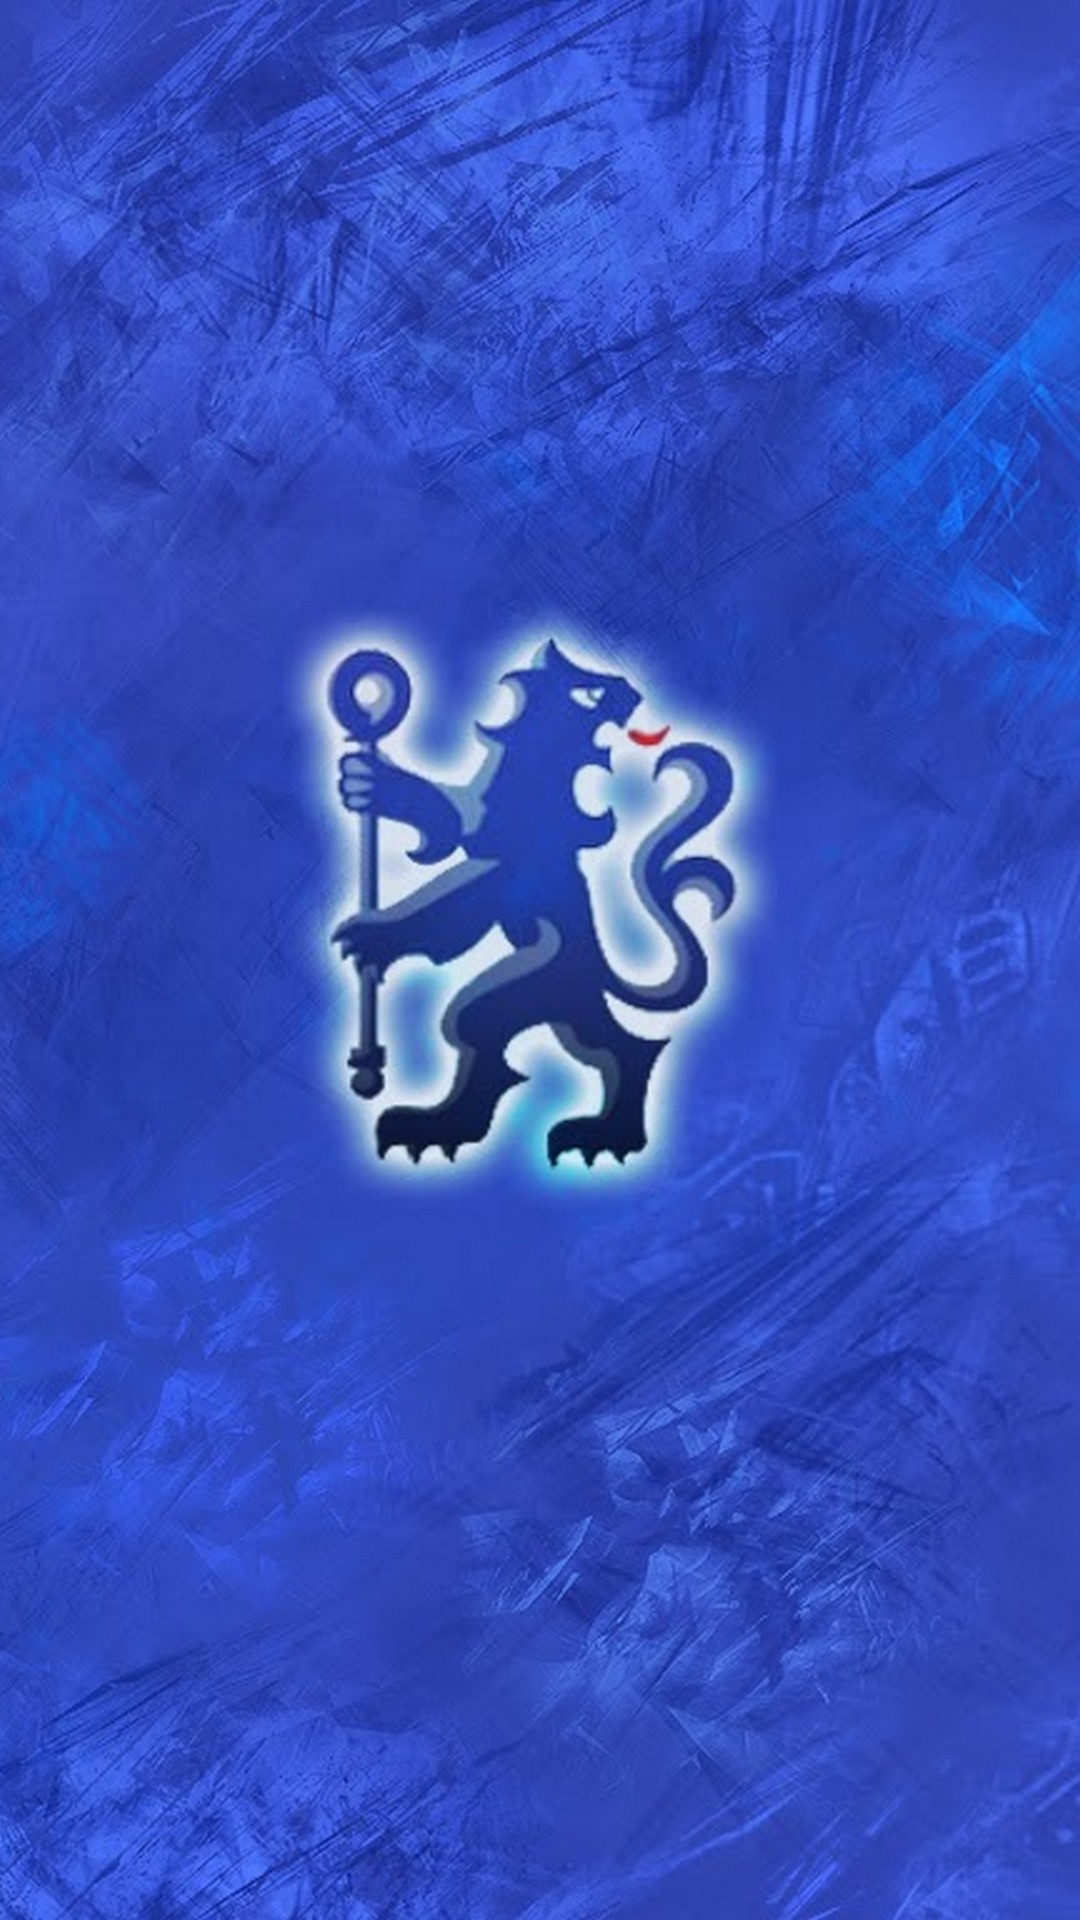 Chelsea Football Wallpaper iPhone HD Football Wallpaper